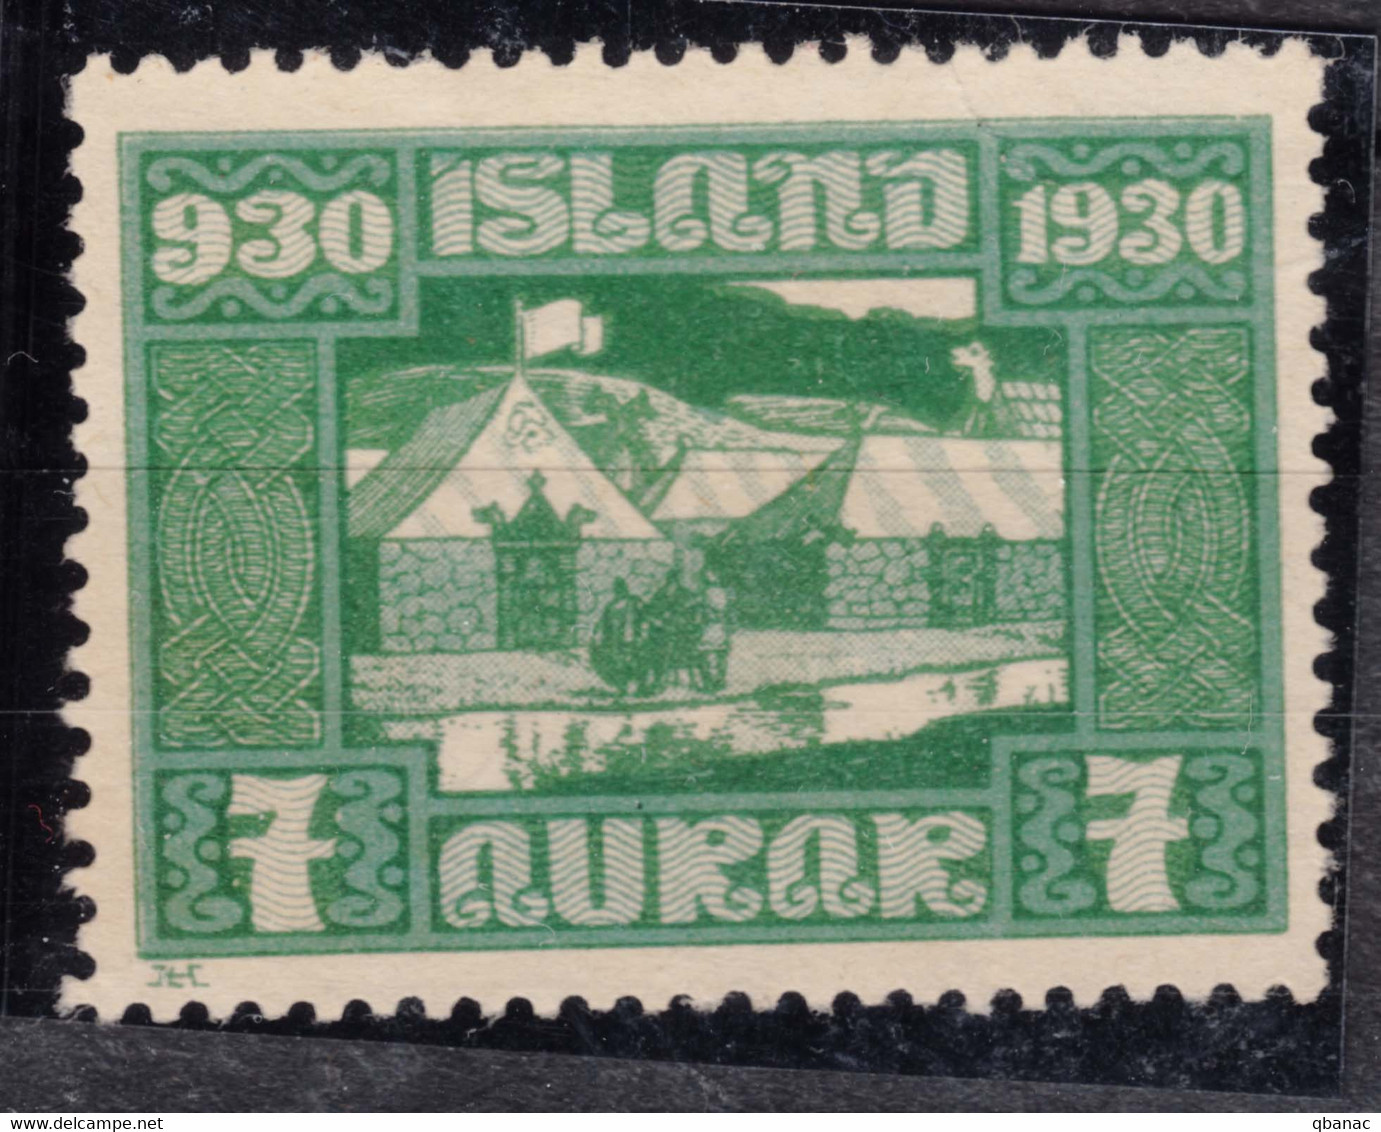 Iceland Island Ijsland 1930 Mi#127 Mint No Gum, No Hinge Mark - Ongebruikt